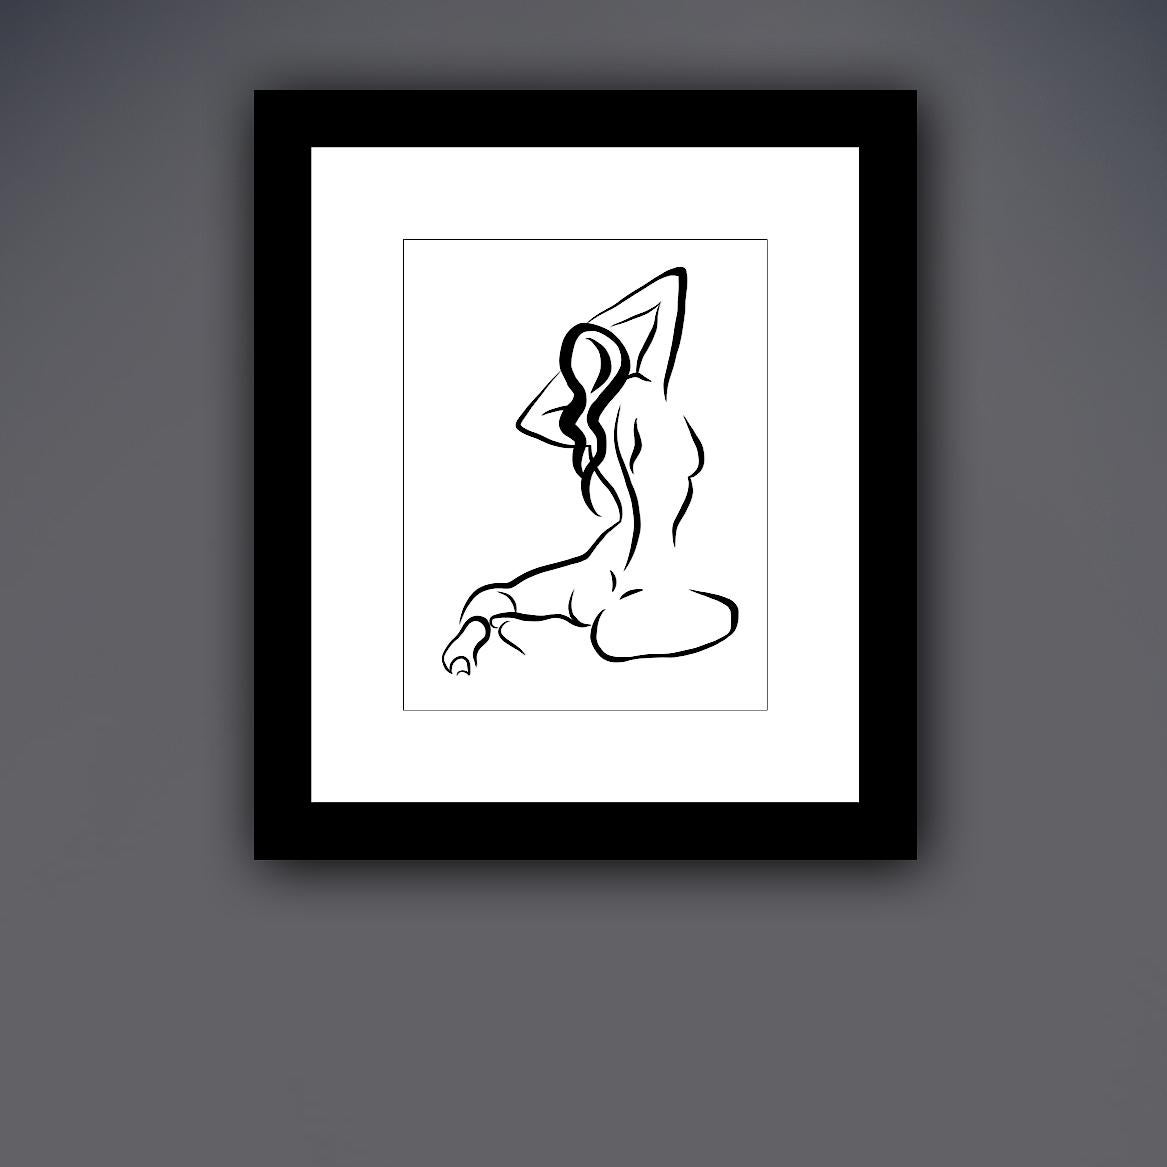 Haiku #17, 1/50 - Digital Vector Drawing of Seated Female Nude from Behind - Contemporary Print by Michael Binkley